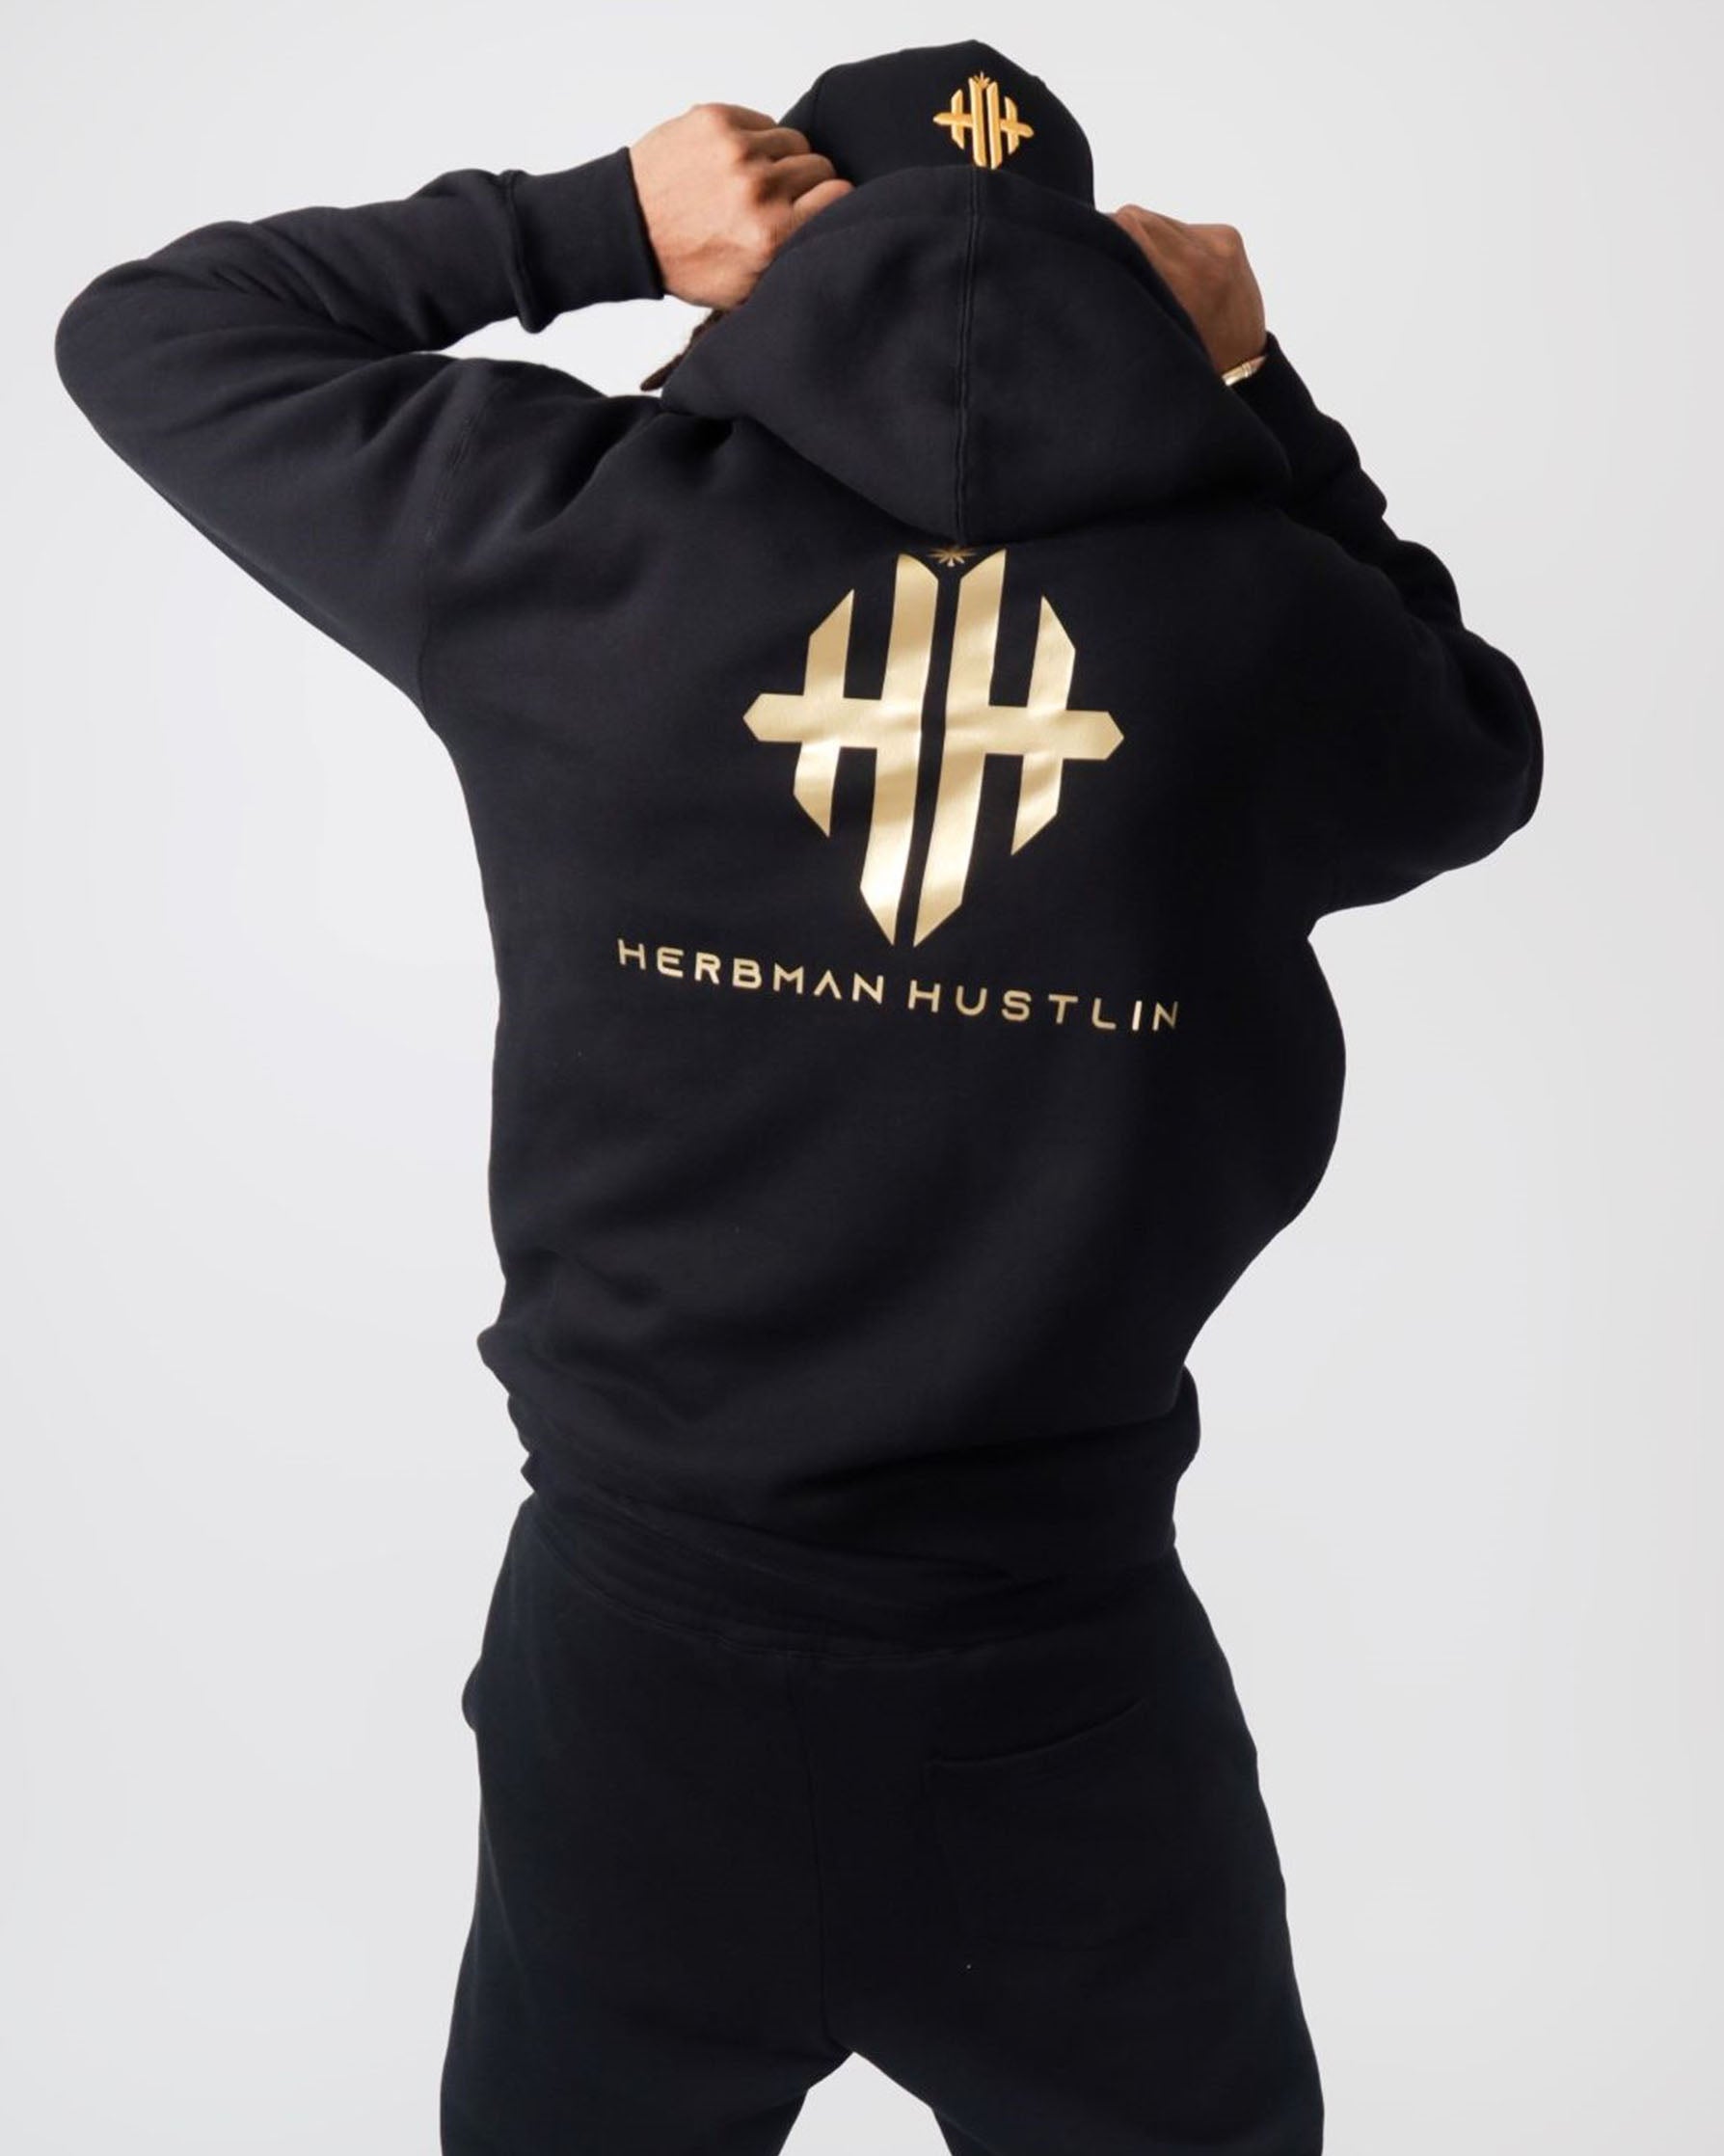 Herbman Hustlin Gold Emblem Heavyweight Monogram Hoodie - Black/Gold